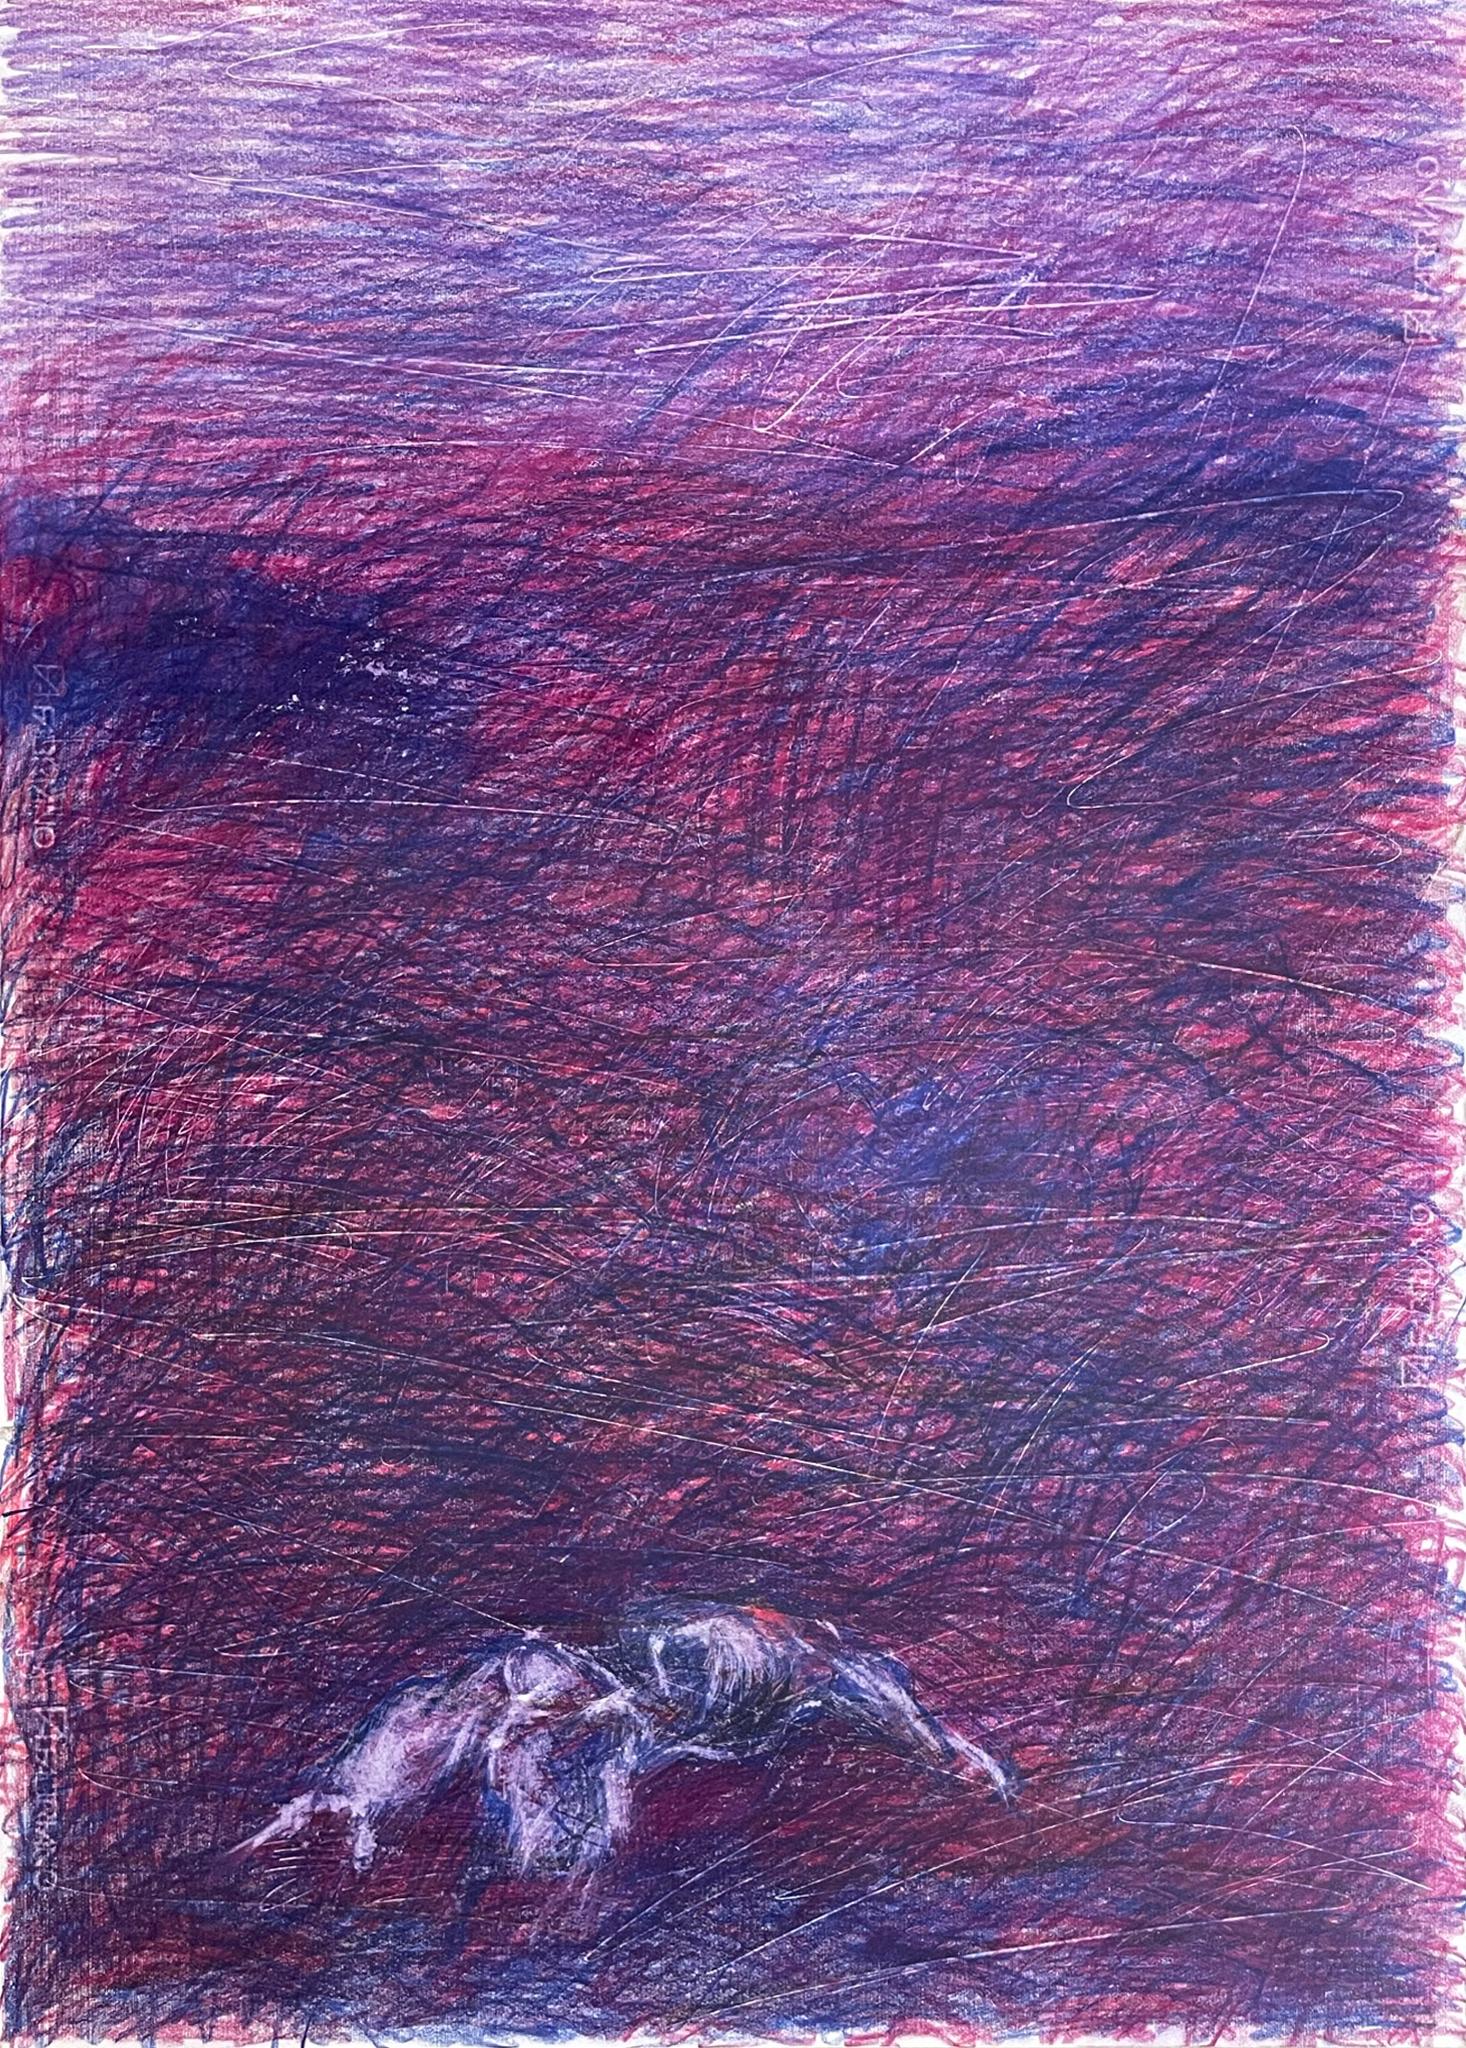 Untitled 05 - Contemporary, Drawing, Purple, 21st Century, Organic